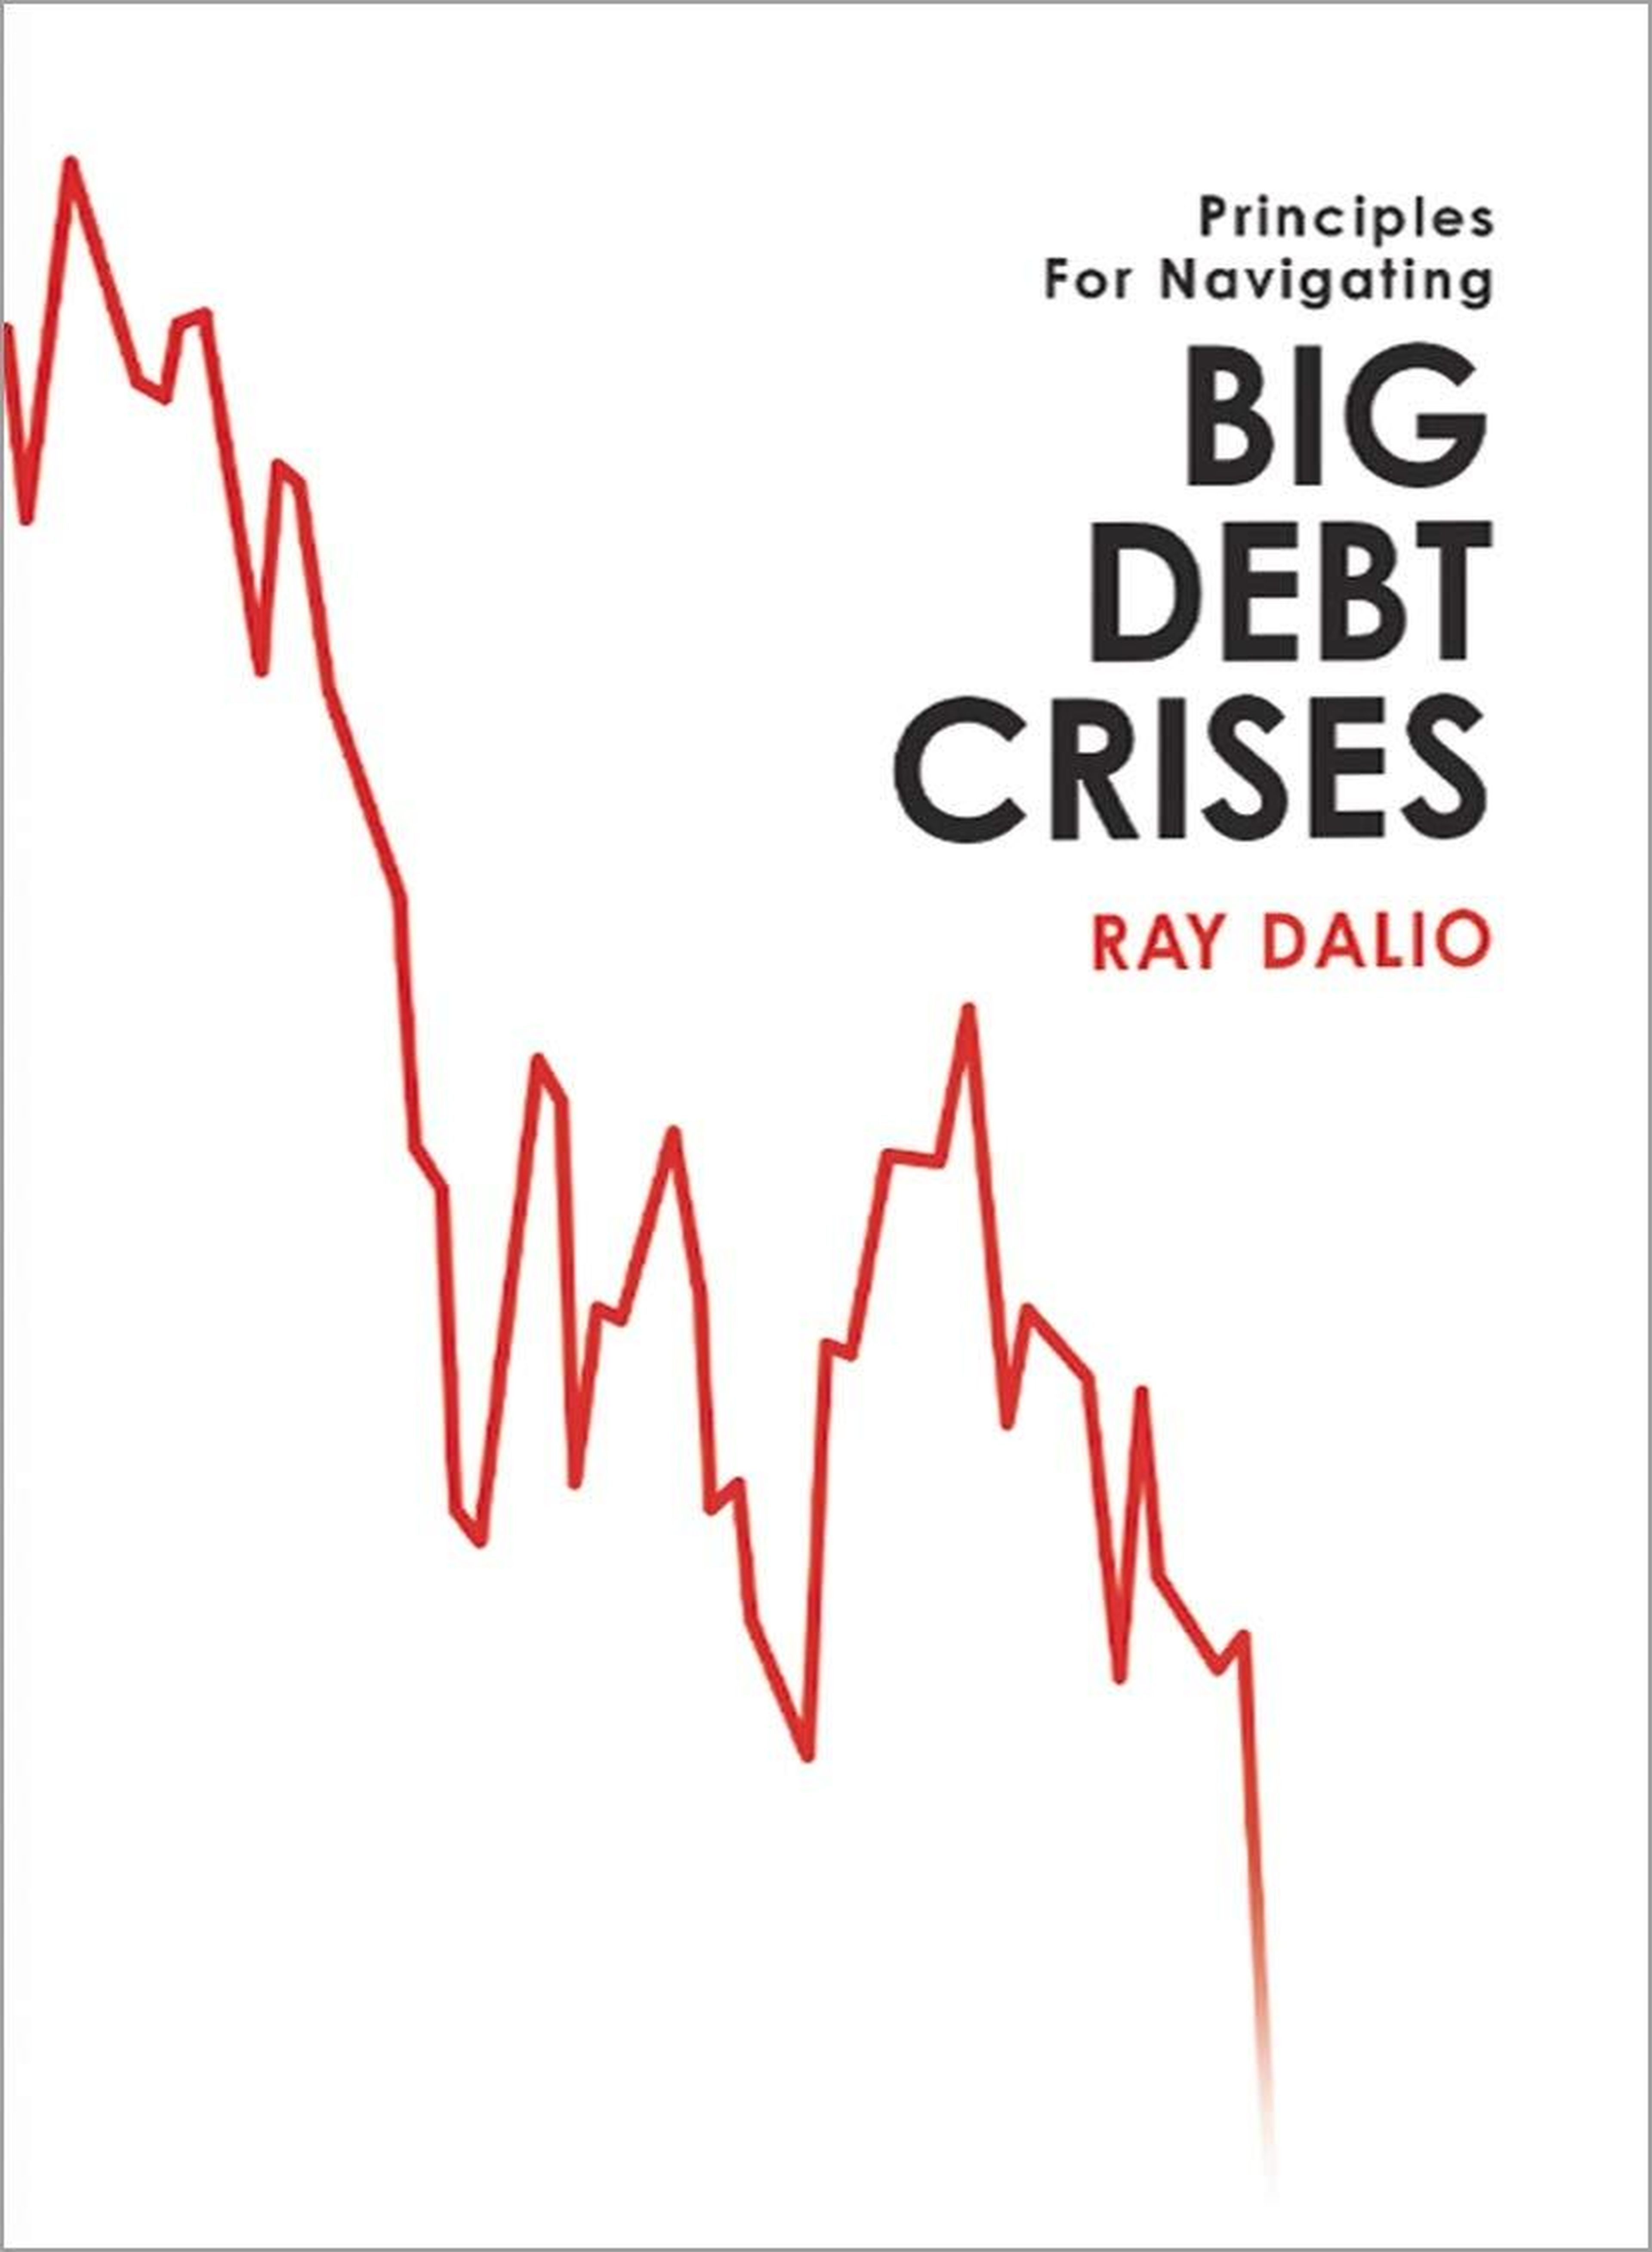 'Principles for Navigating Big Debt Crises' by Ray Dalio